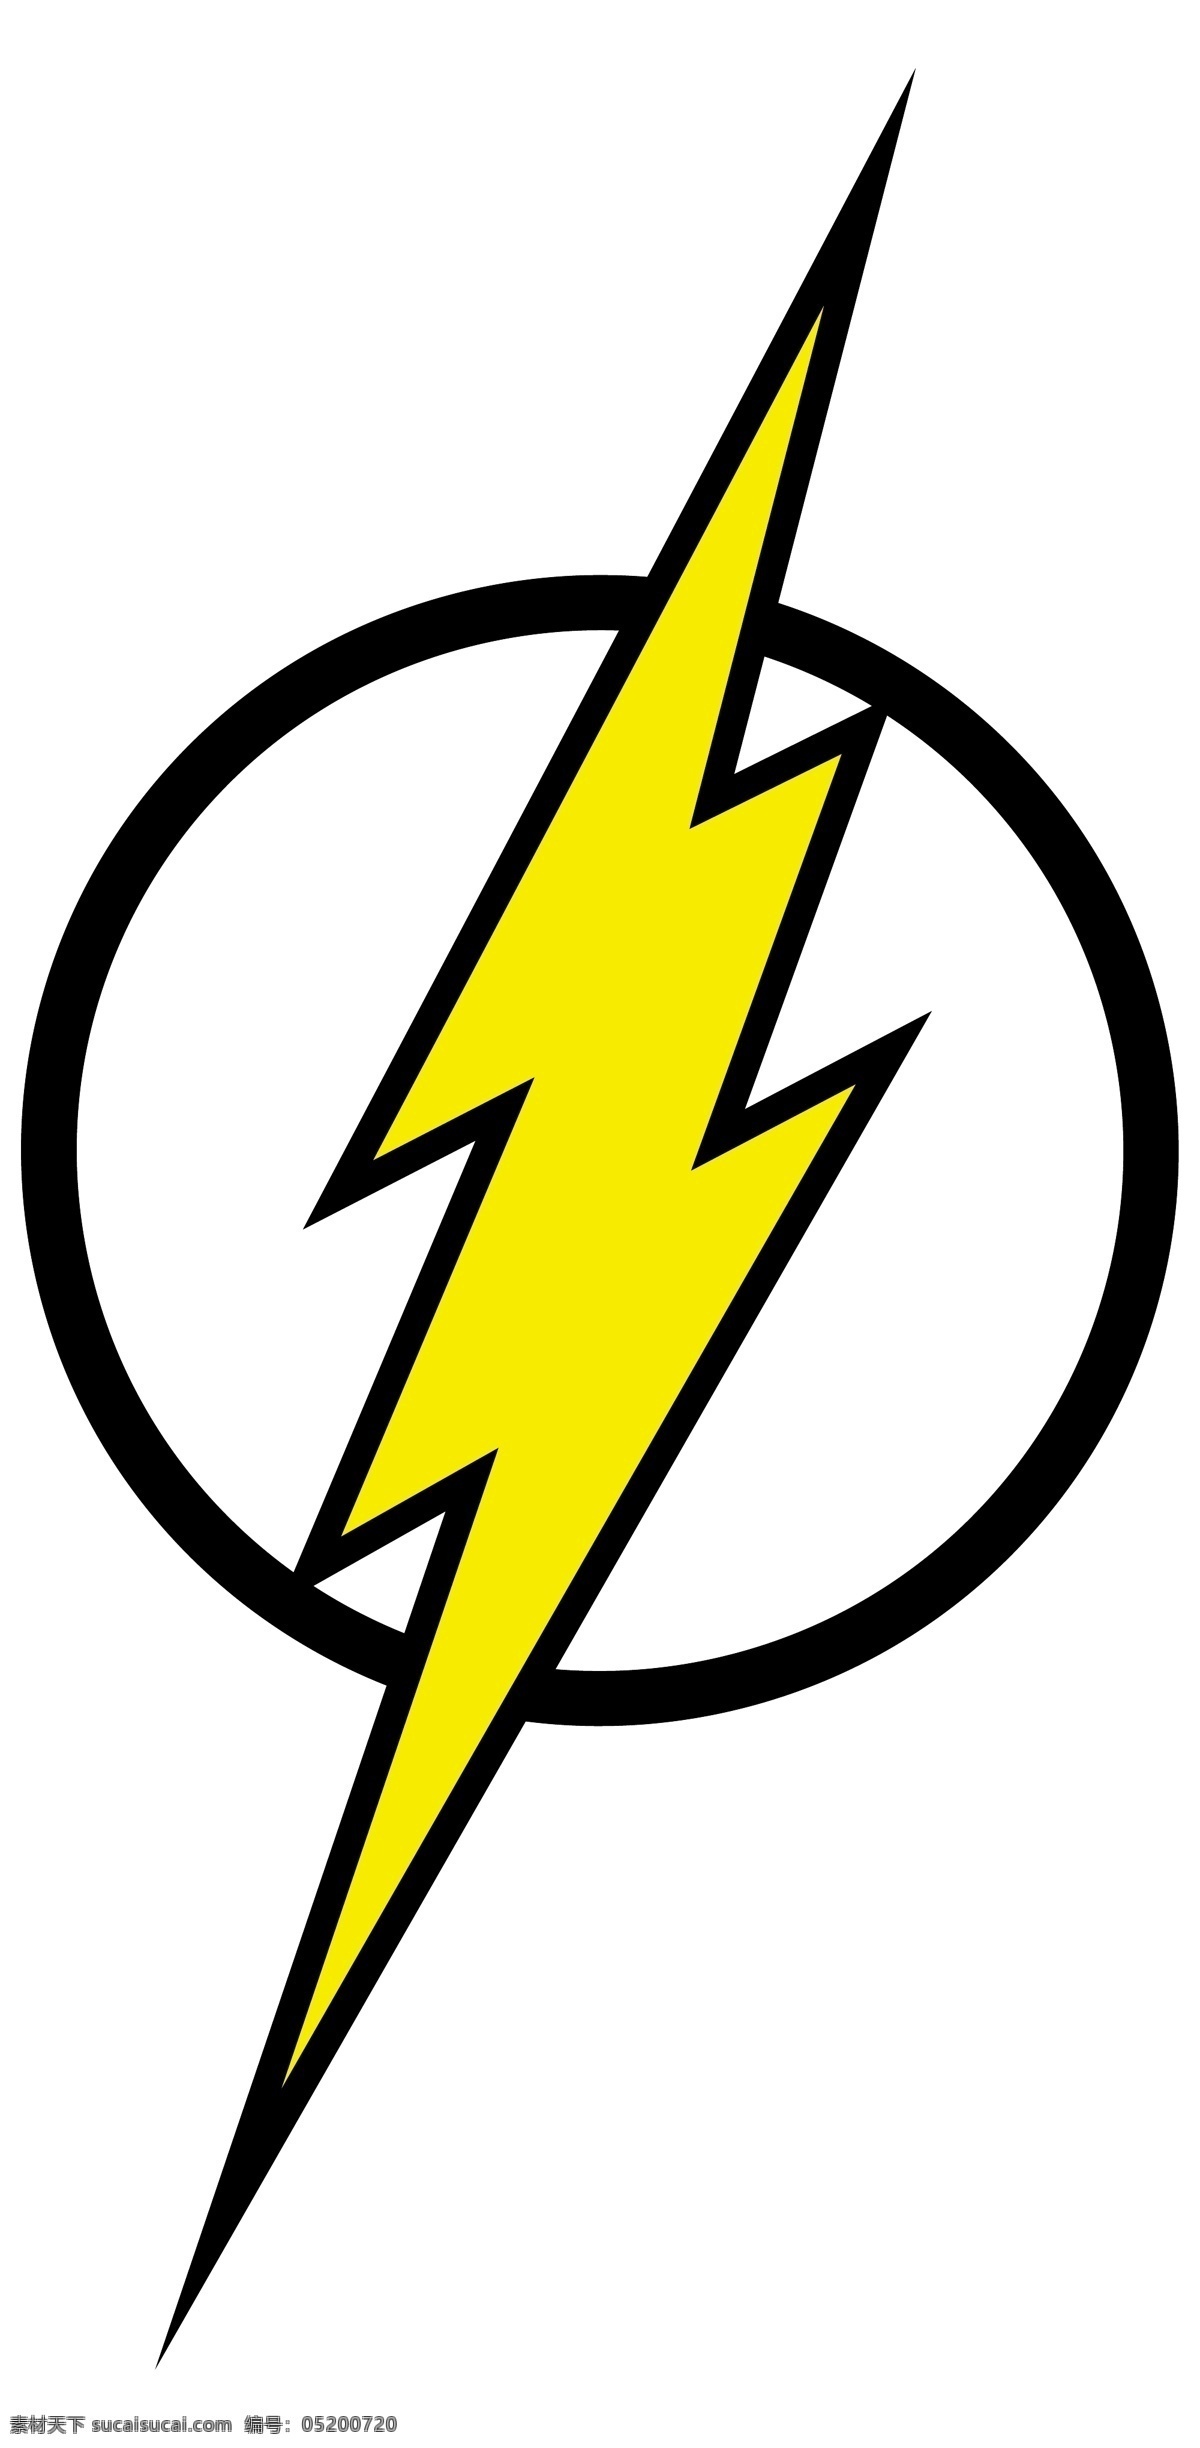 flash superman 蝙蝠侠 标识标志图标 标志 超人 卡通形象 其他人物 矢量人物 闪电侠标志 batman 闪电侠 华纳 dc漫画 超级英雄 英雄联盟 矢量 超人英雄标志 小图标 网页素材